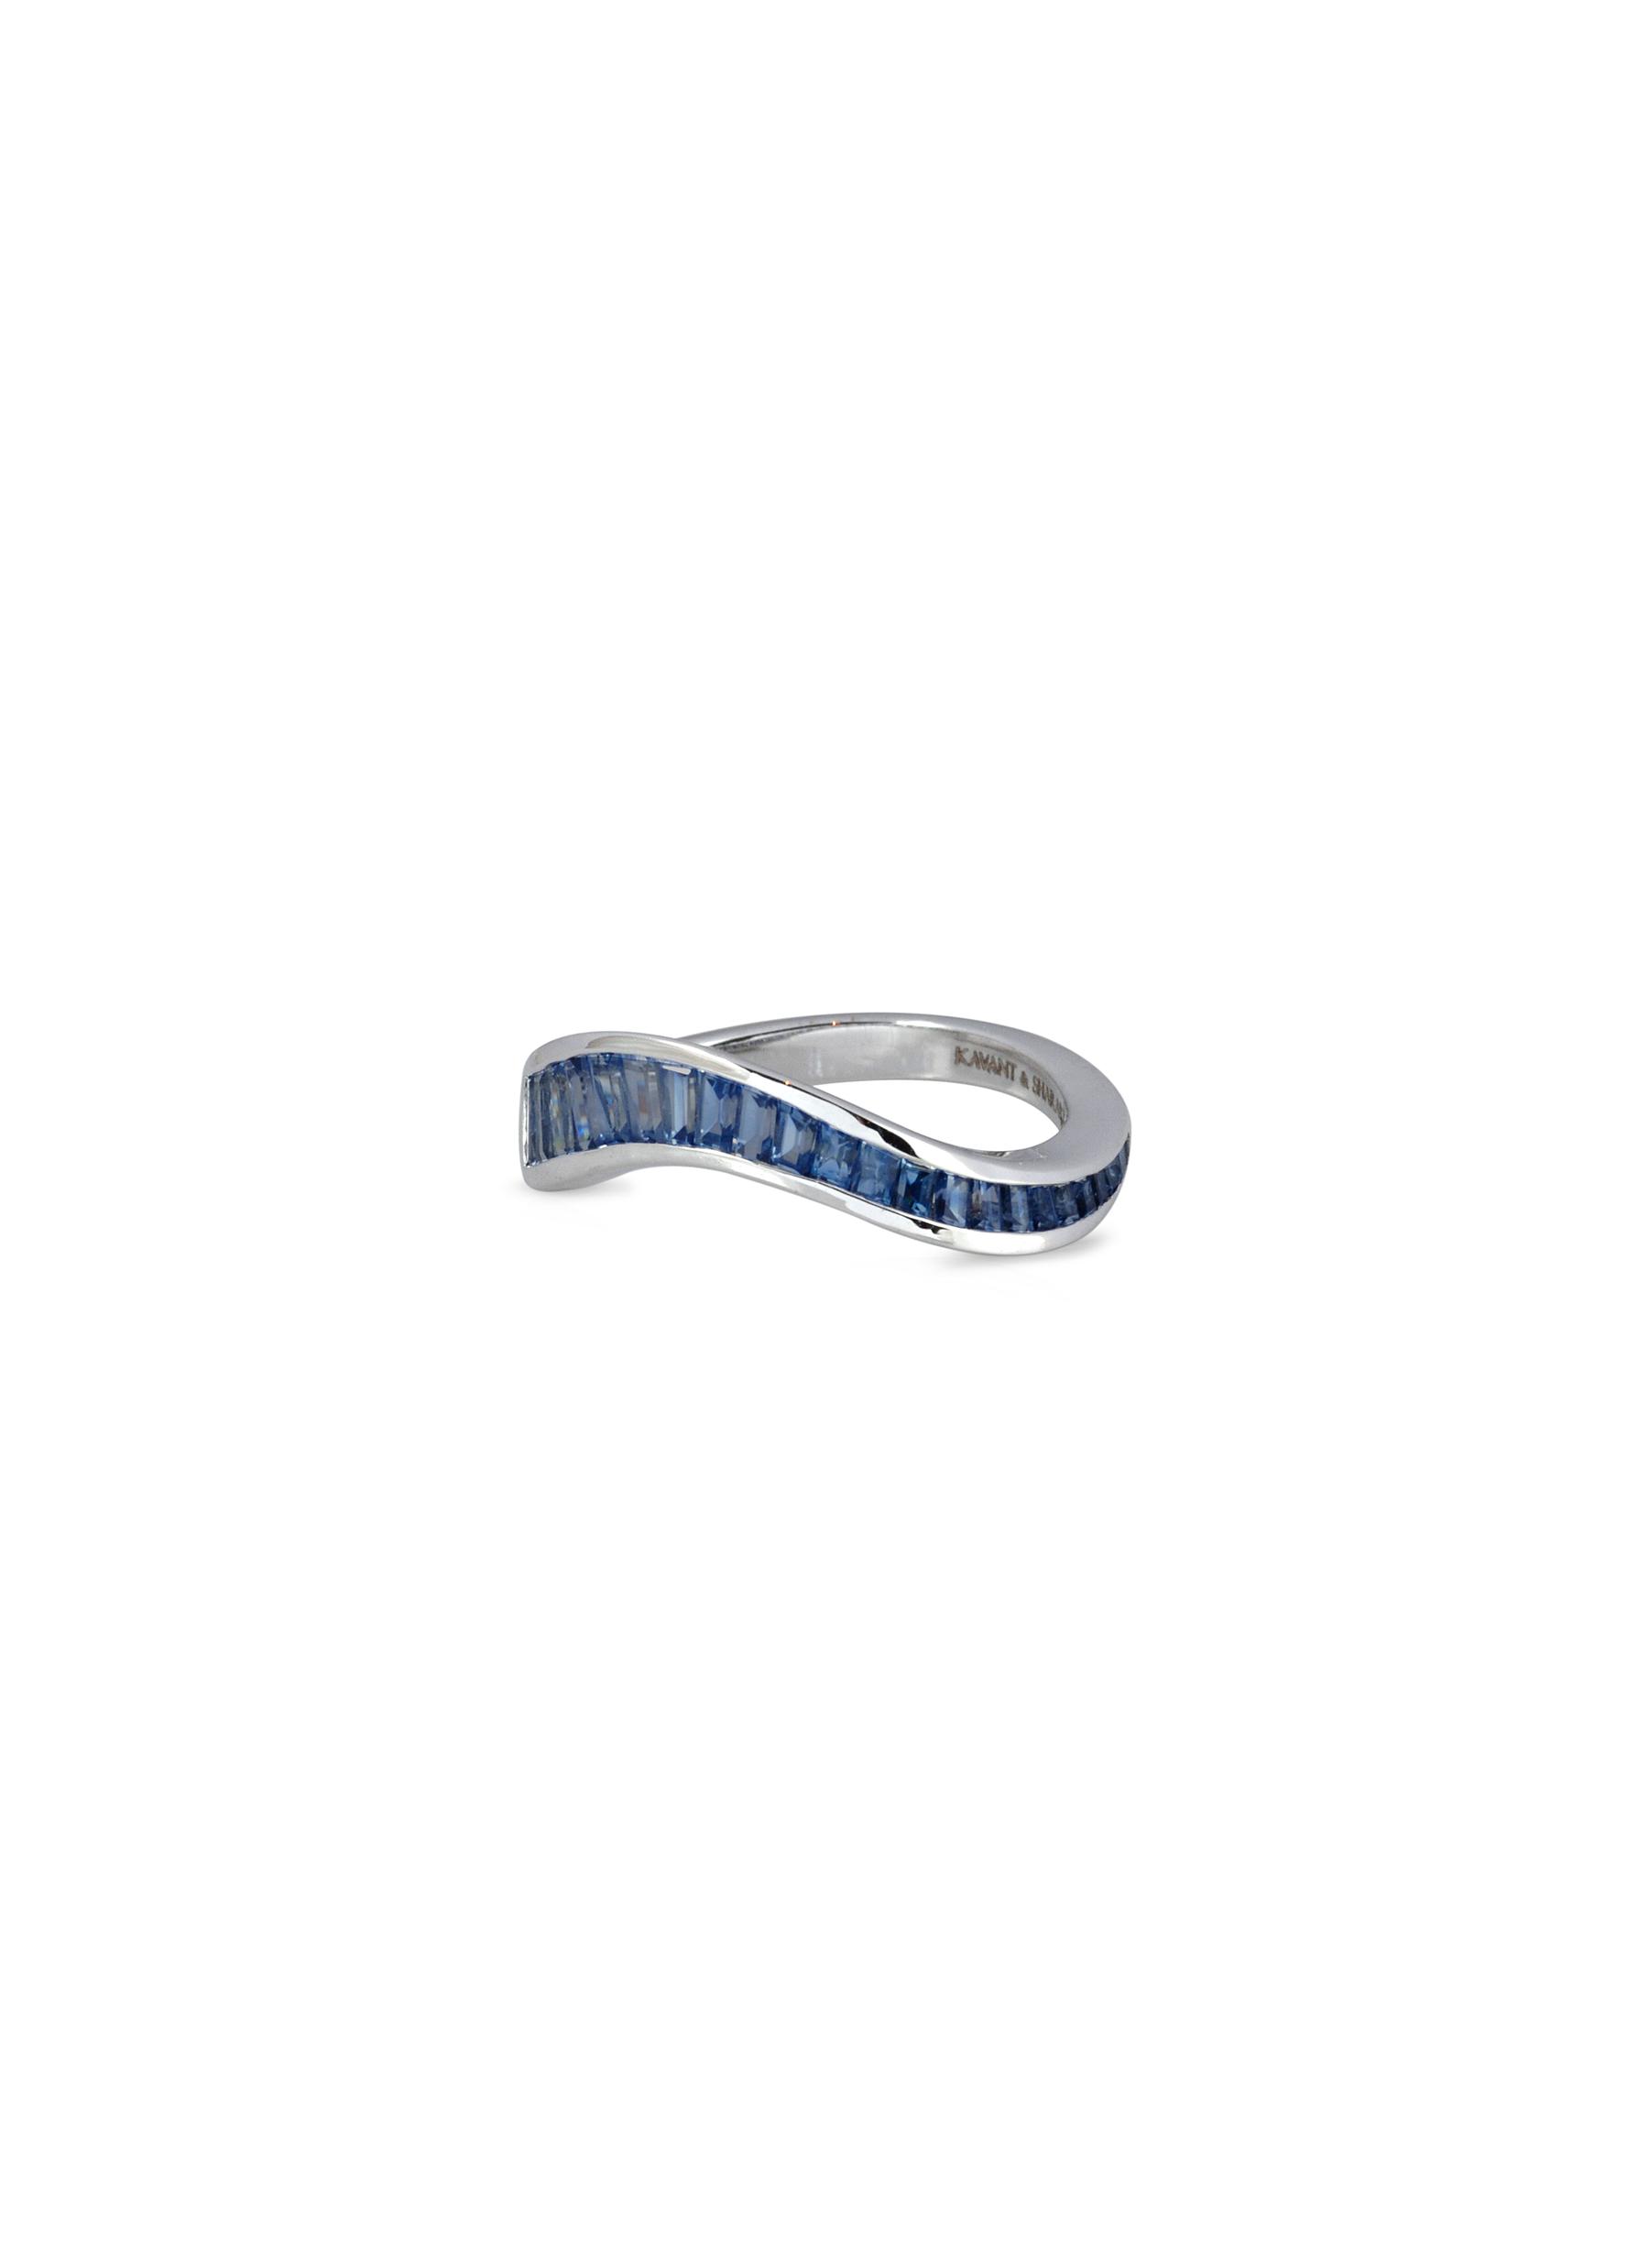 KAVANT & SHARART ‘Talay' Baguette Cut Sapphire 18K White Gold Wave Ring